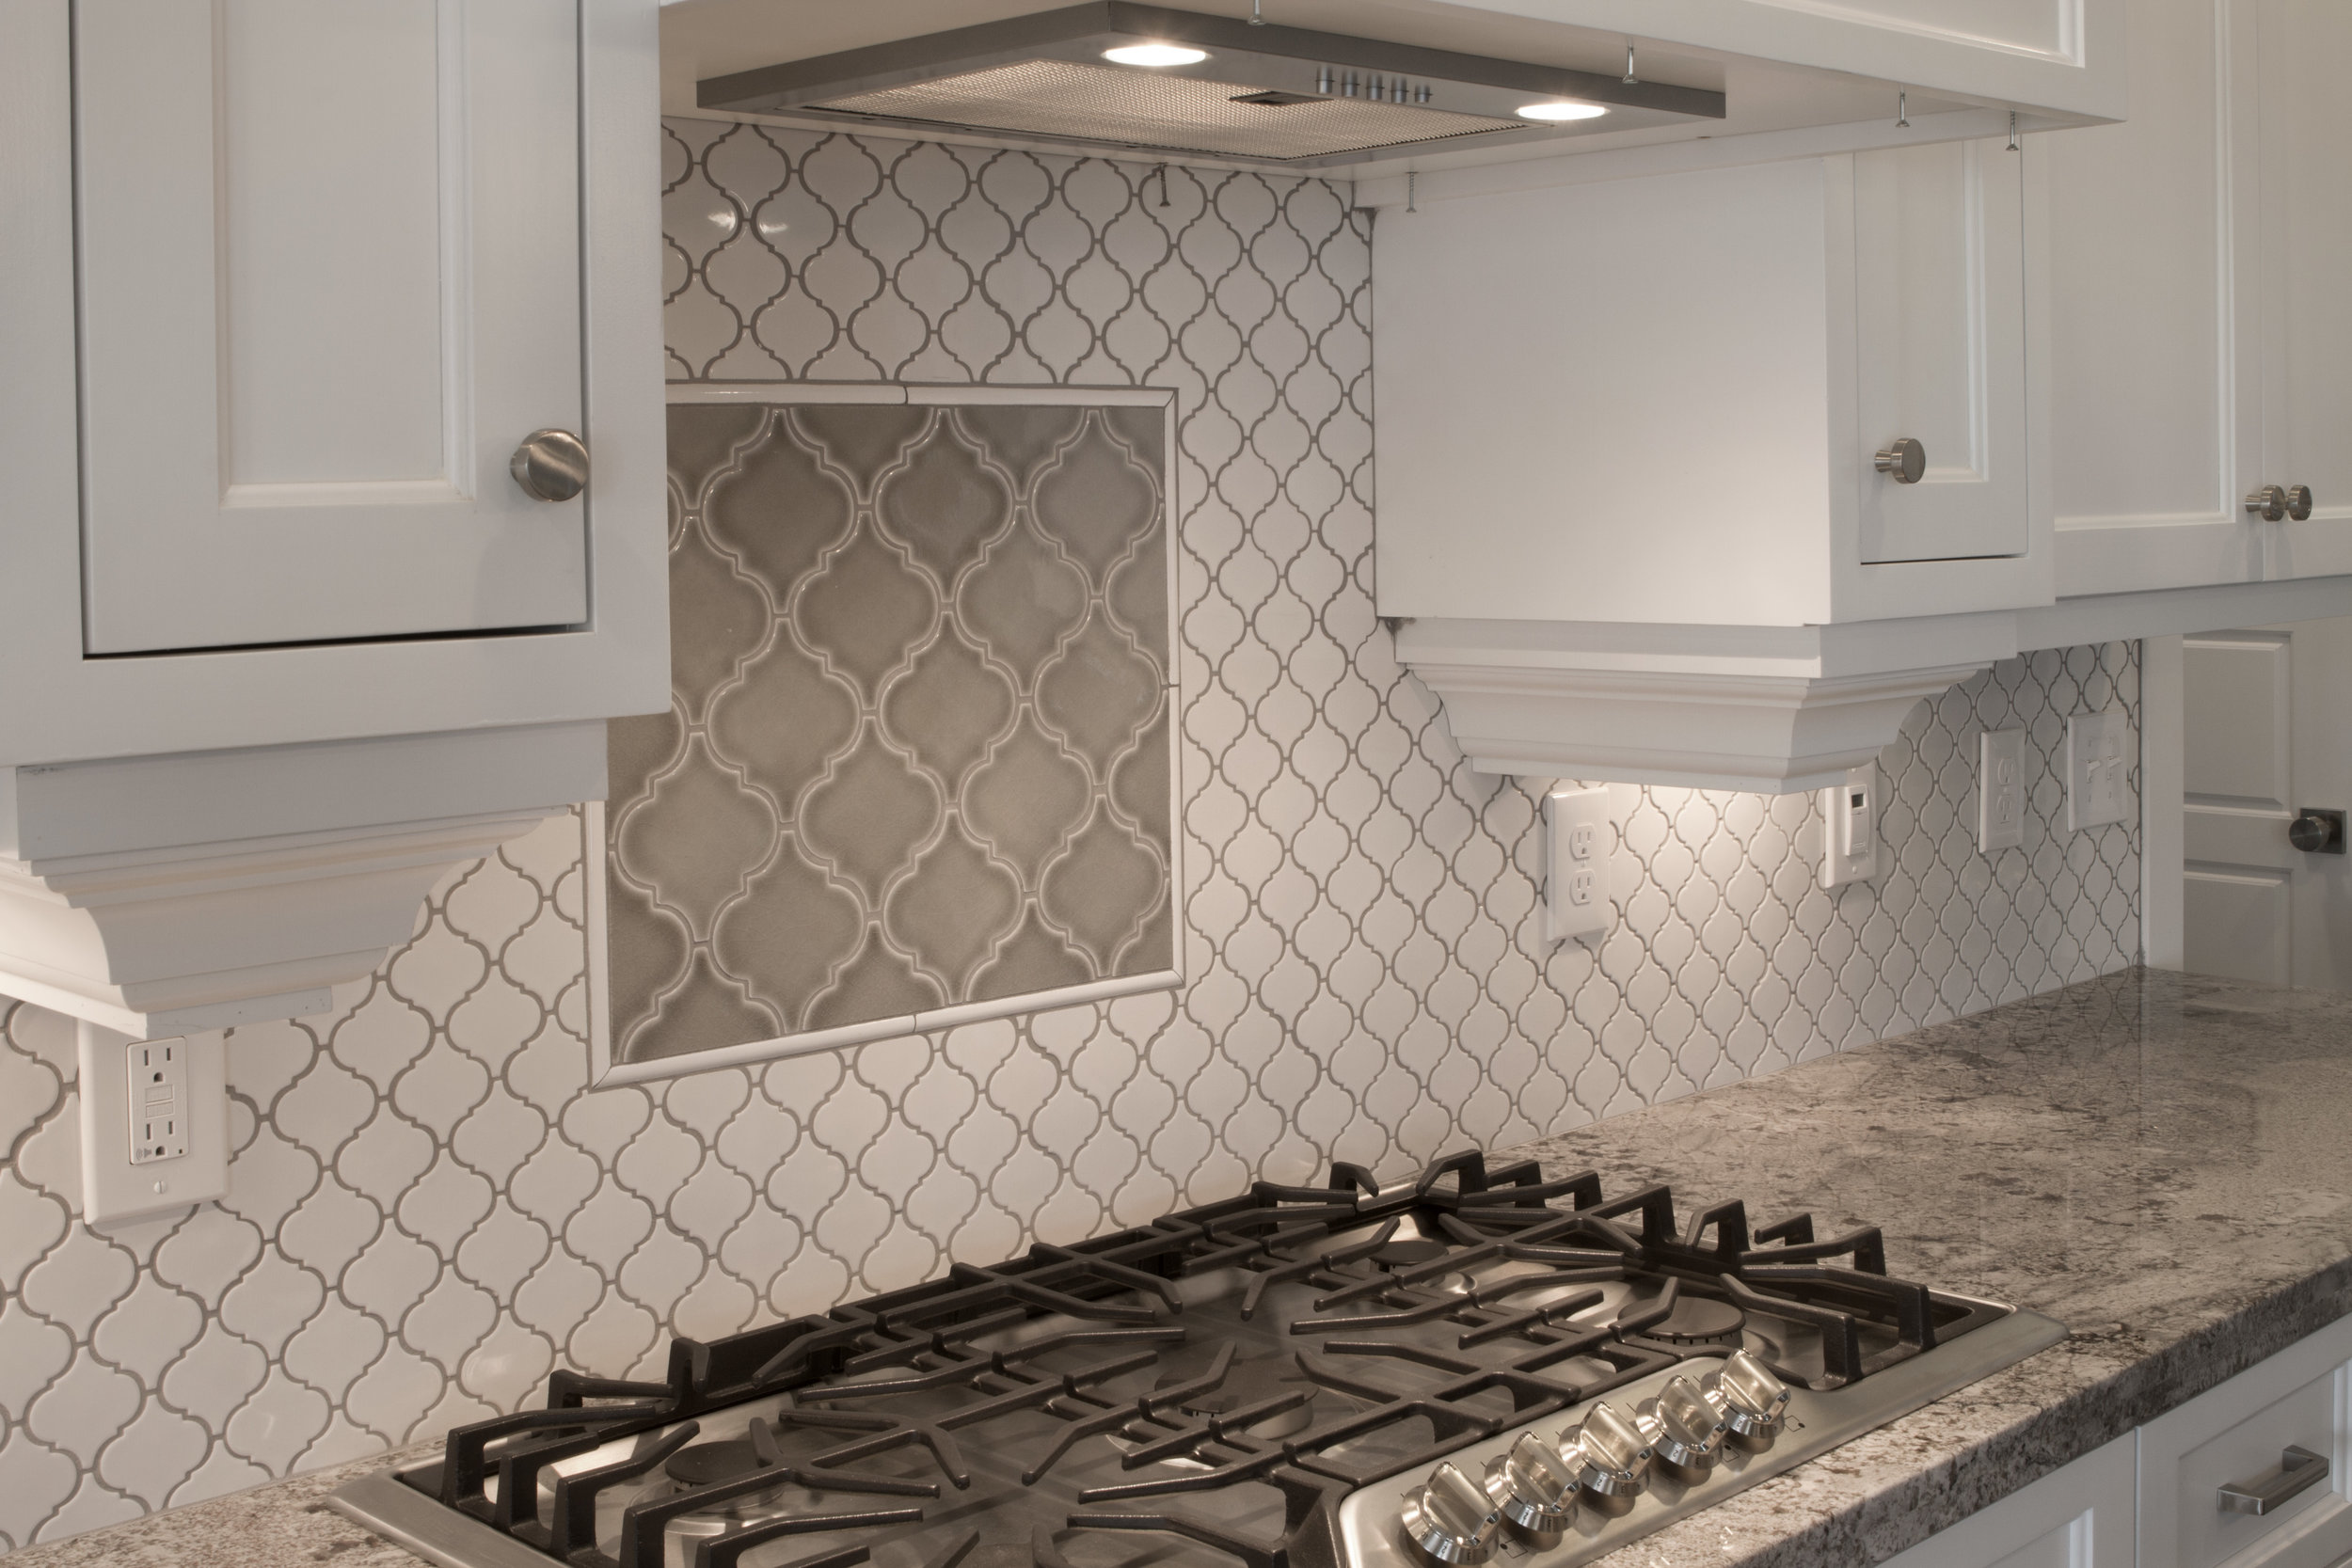 New Kitchen Bathroom Tile Backsplash Installation Rigby 5 Star